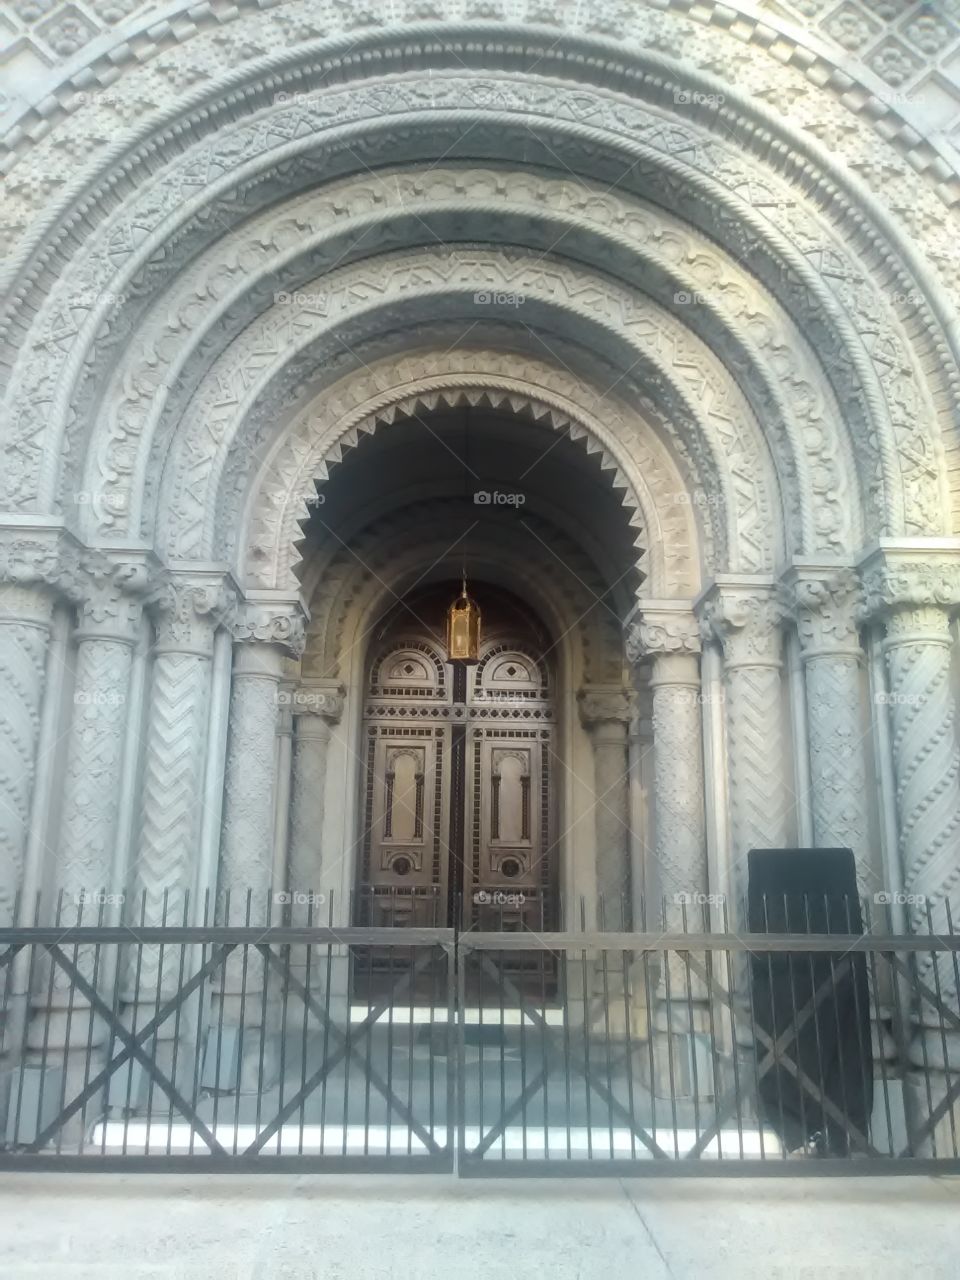 Masonic Landmark in Philly